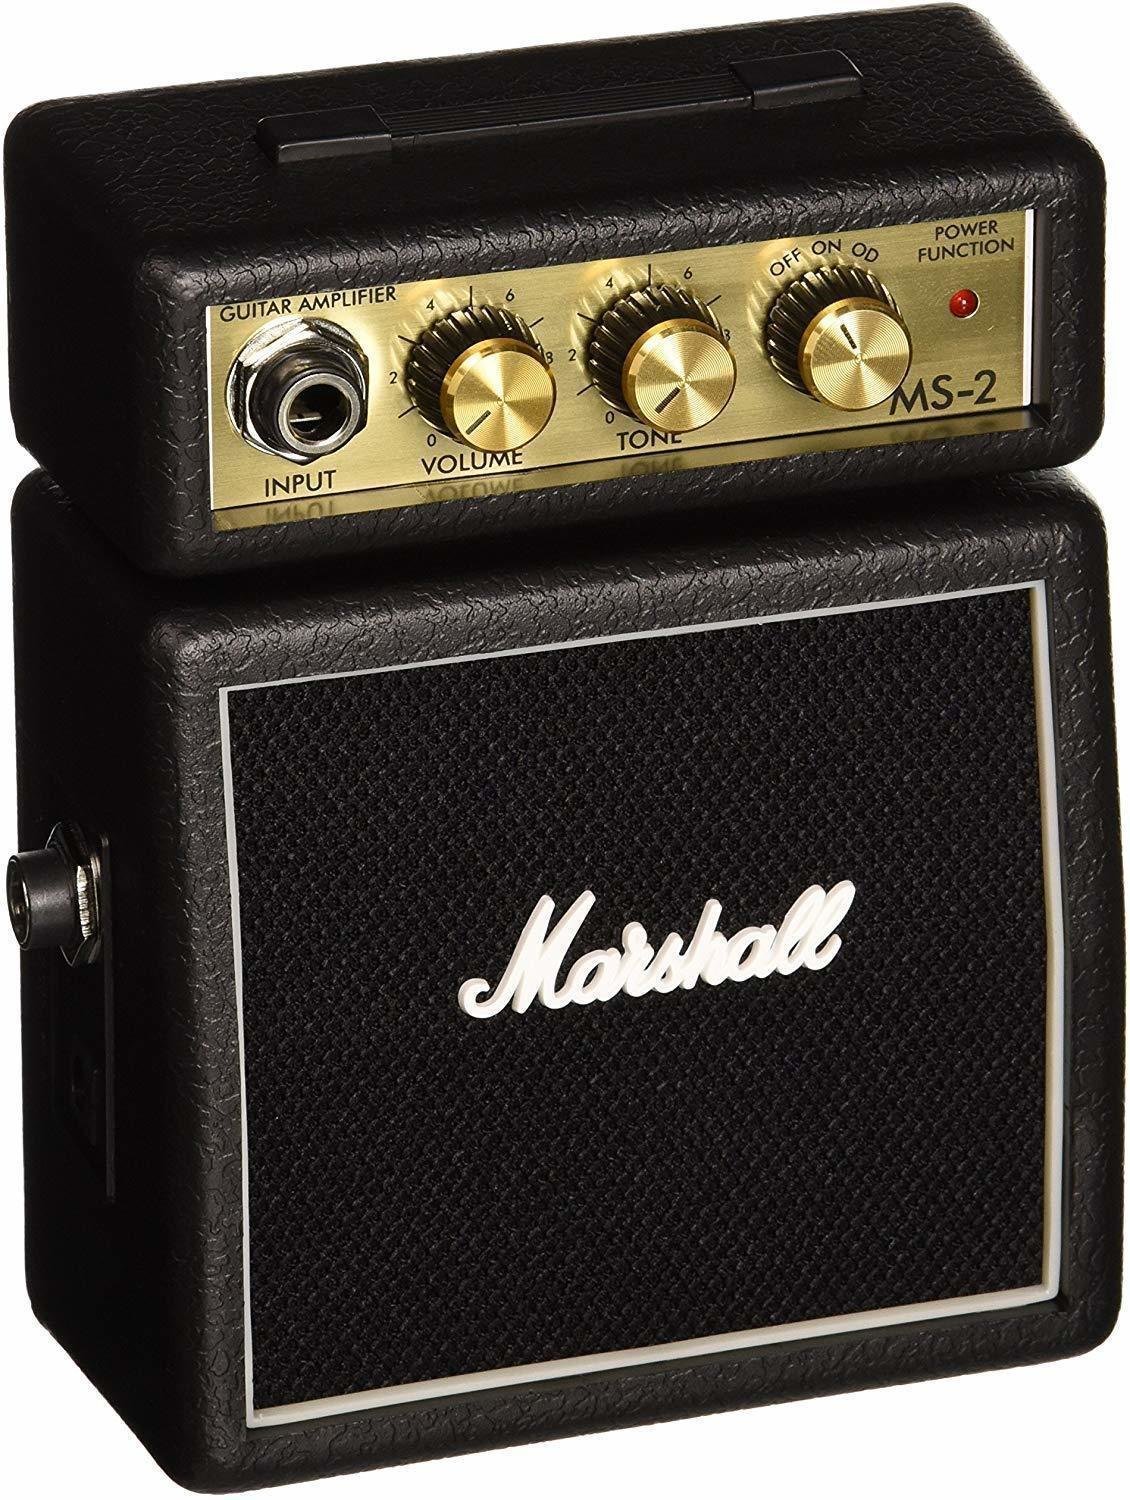 Mini gitarsklo combo pojačalo Marshall MS-2